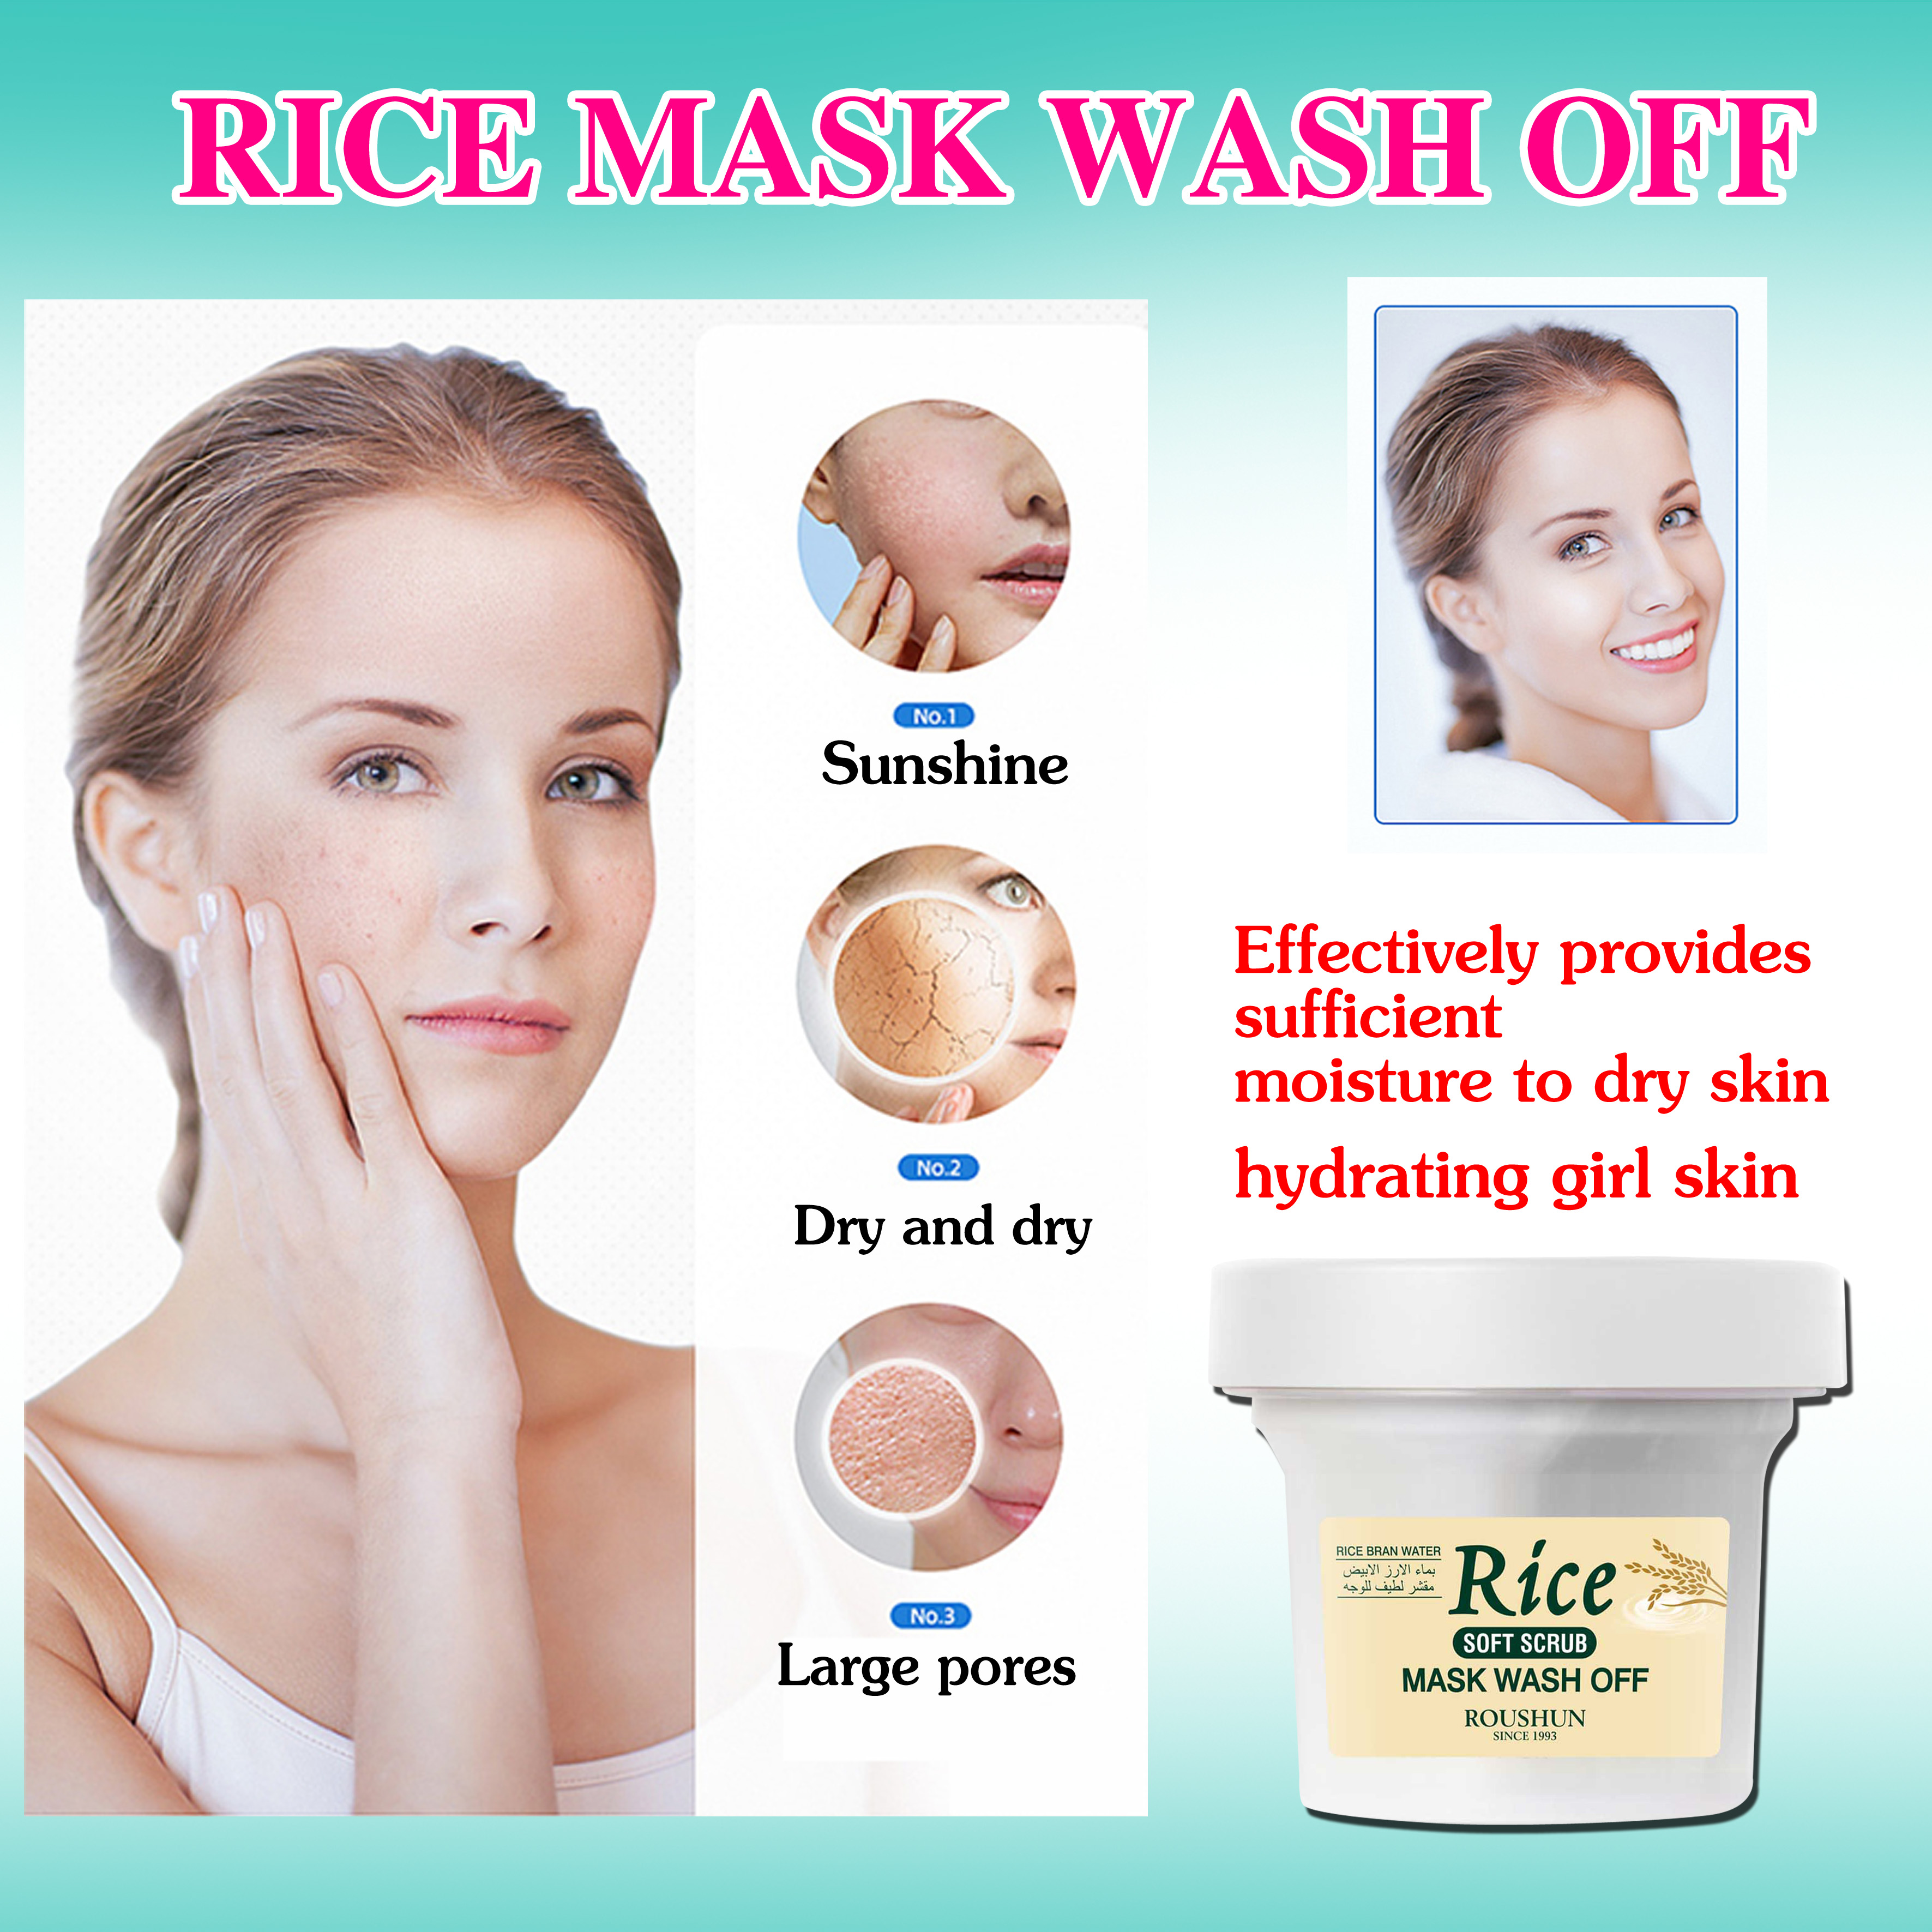 Rice mask